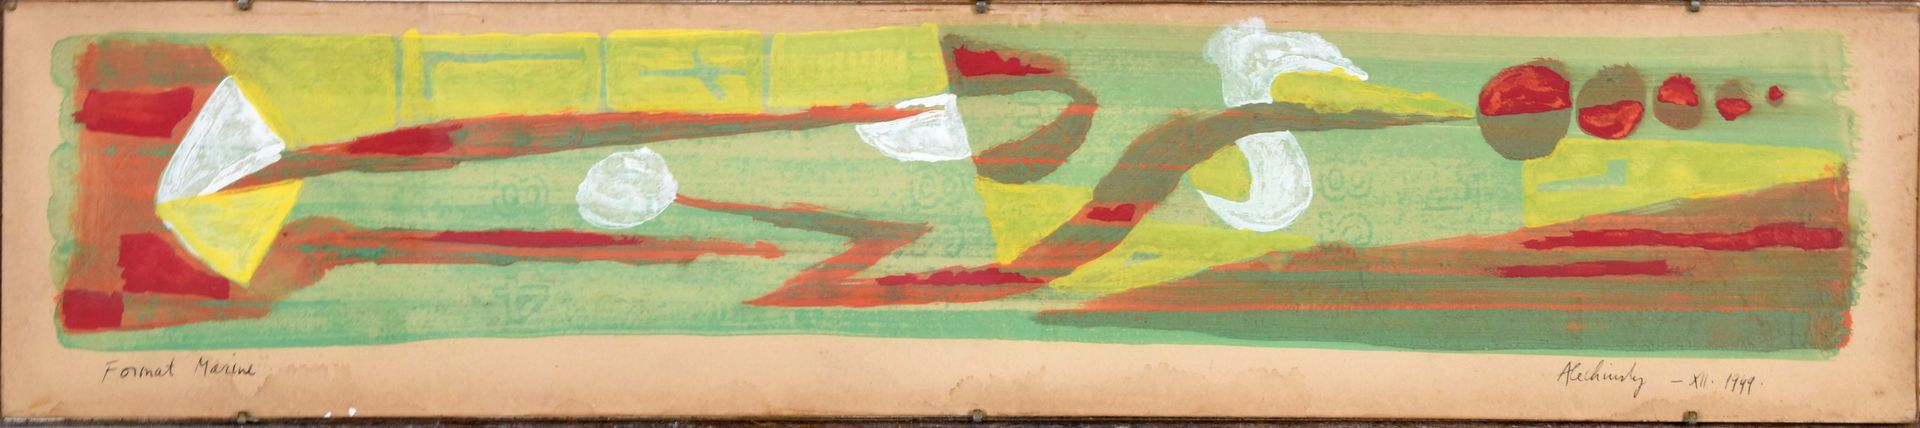 Pierre Alechinsky (1927). 海洋格式，1949 年。纸上水粉画，右下方有签名。尺寸：14 x 65 厘米